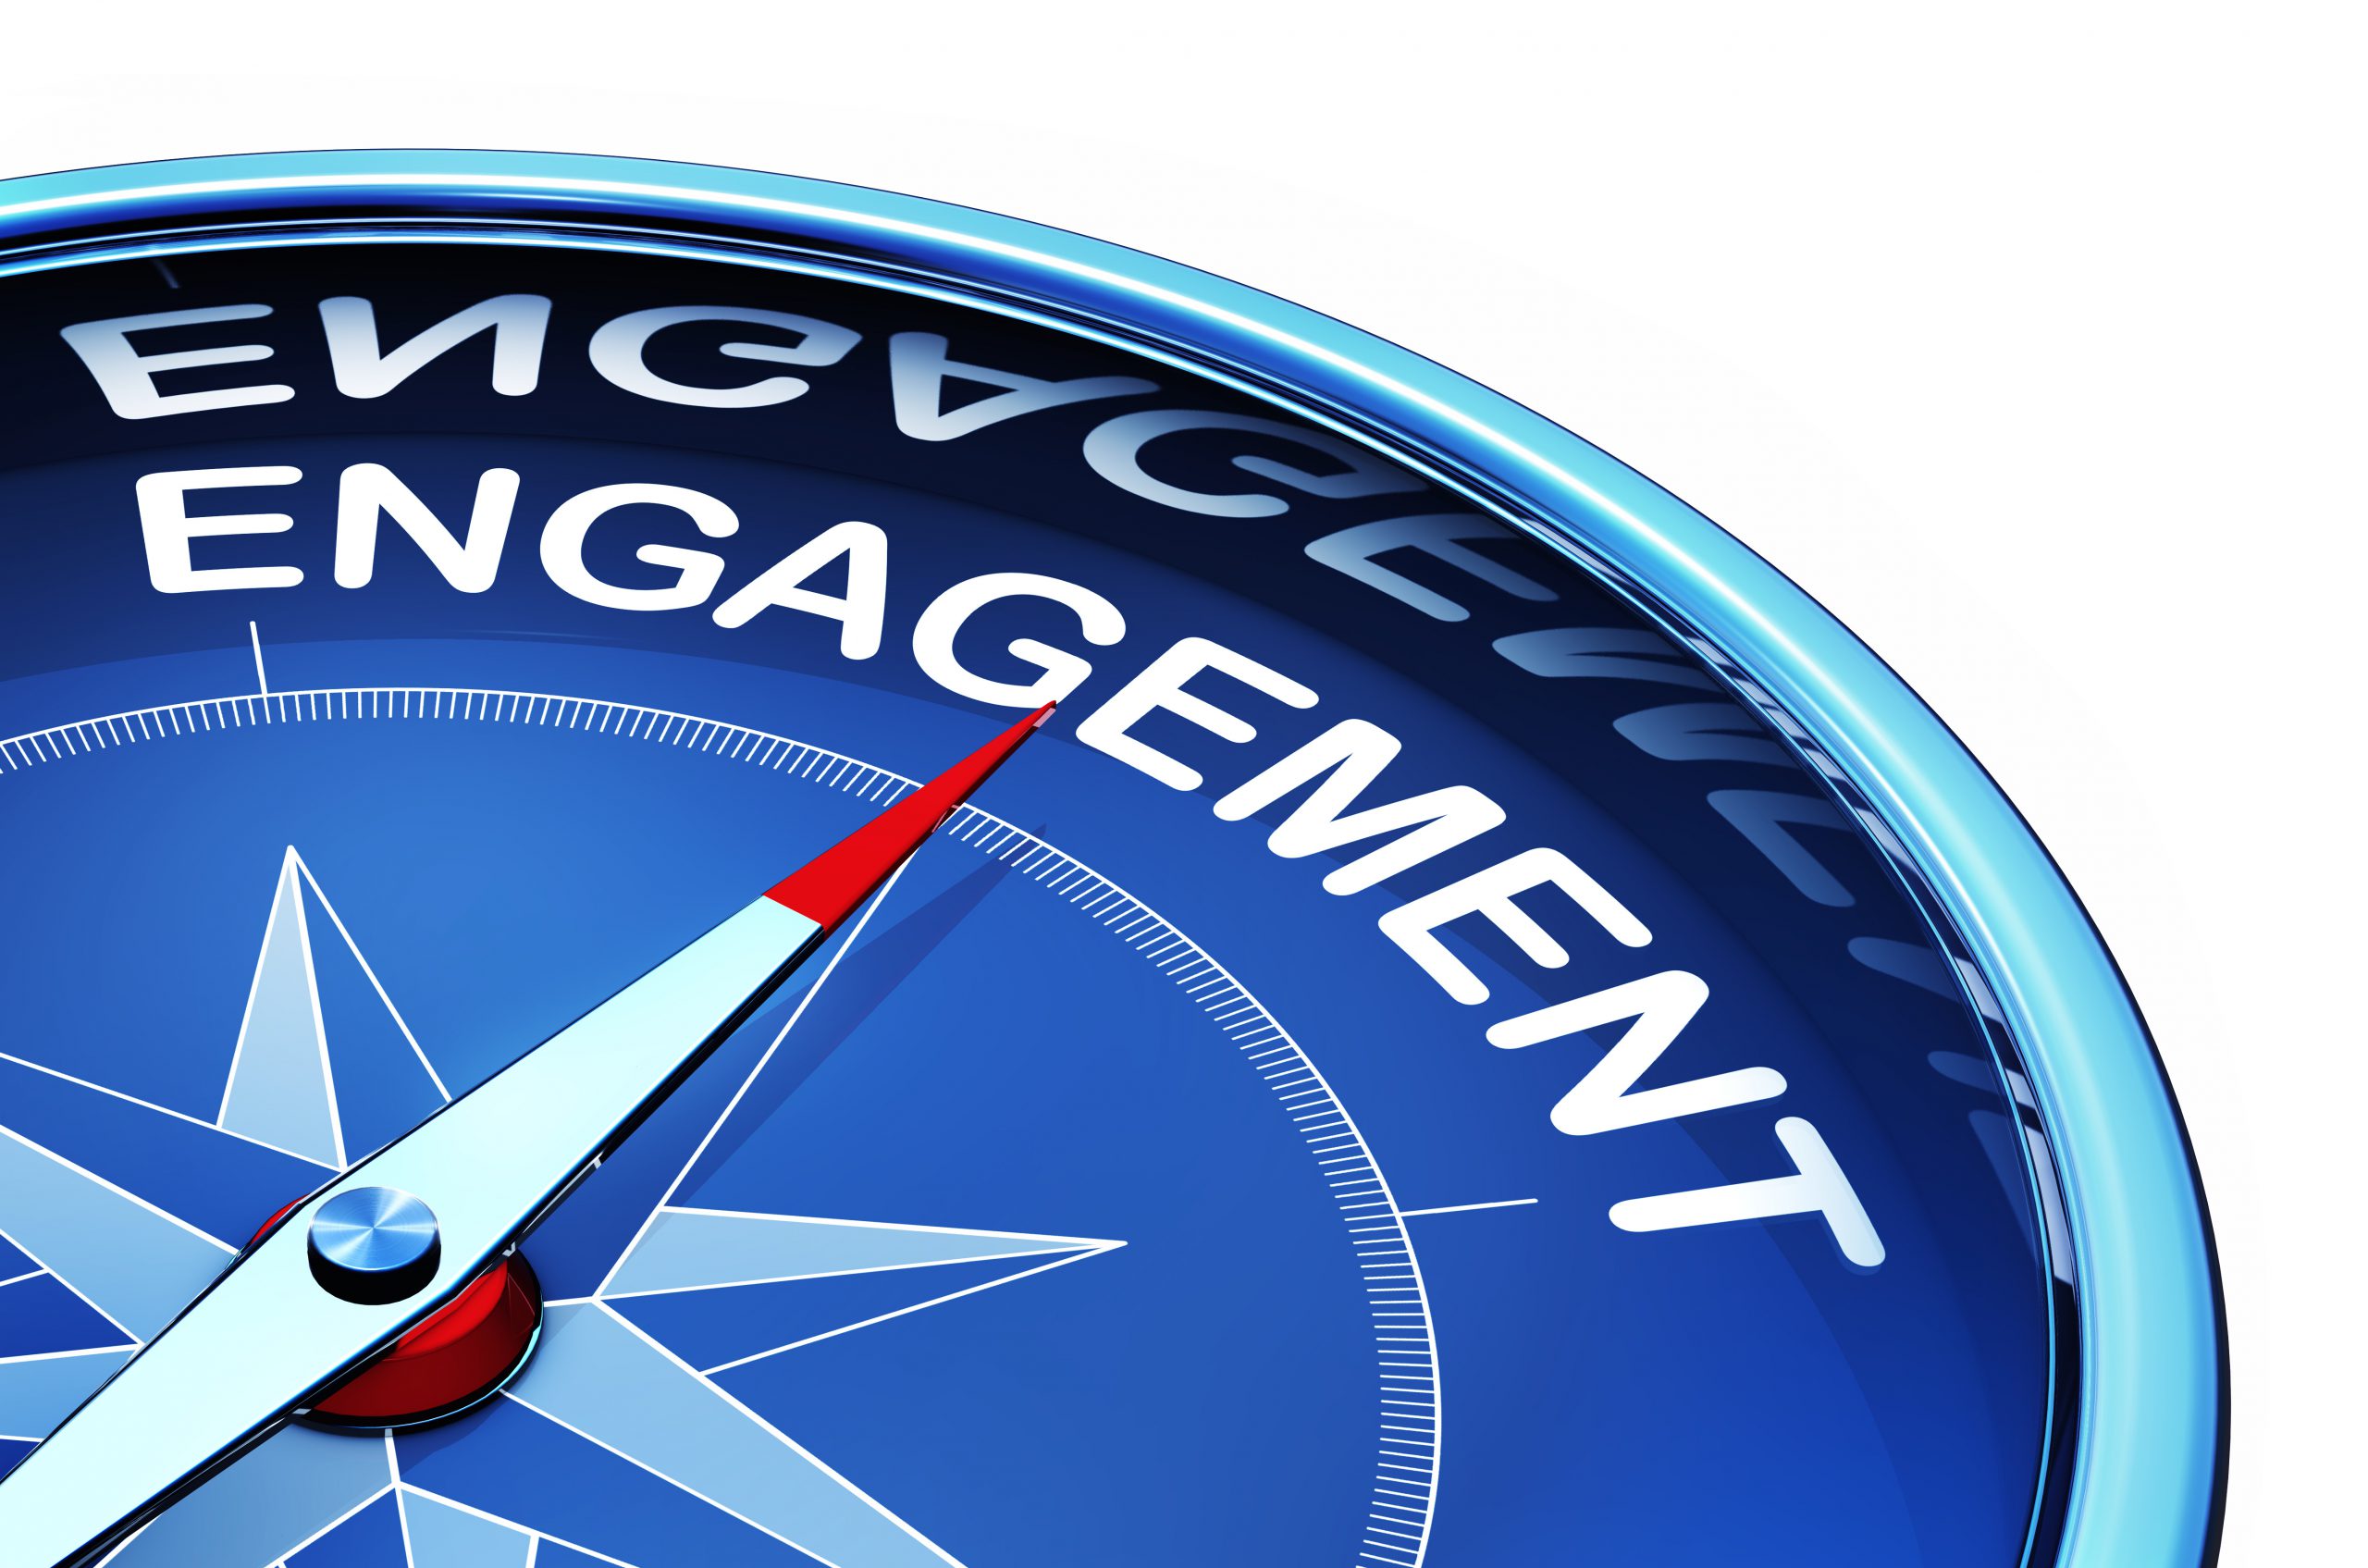 Employee Engagement Software for Organization Success